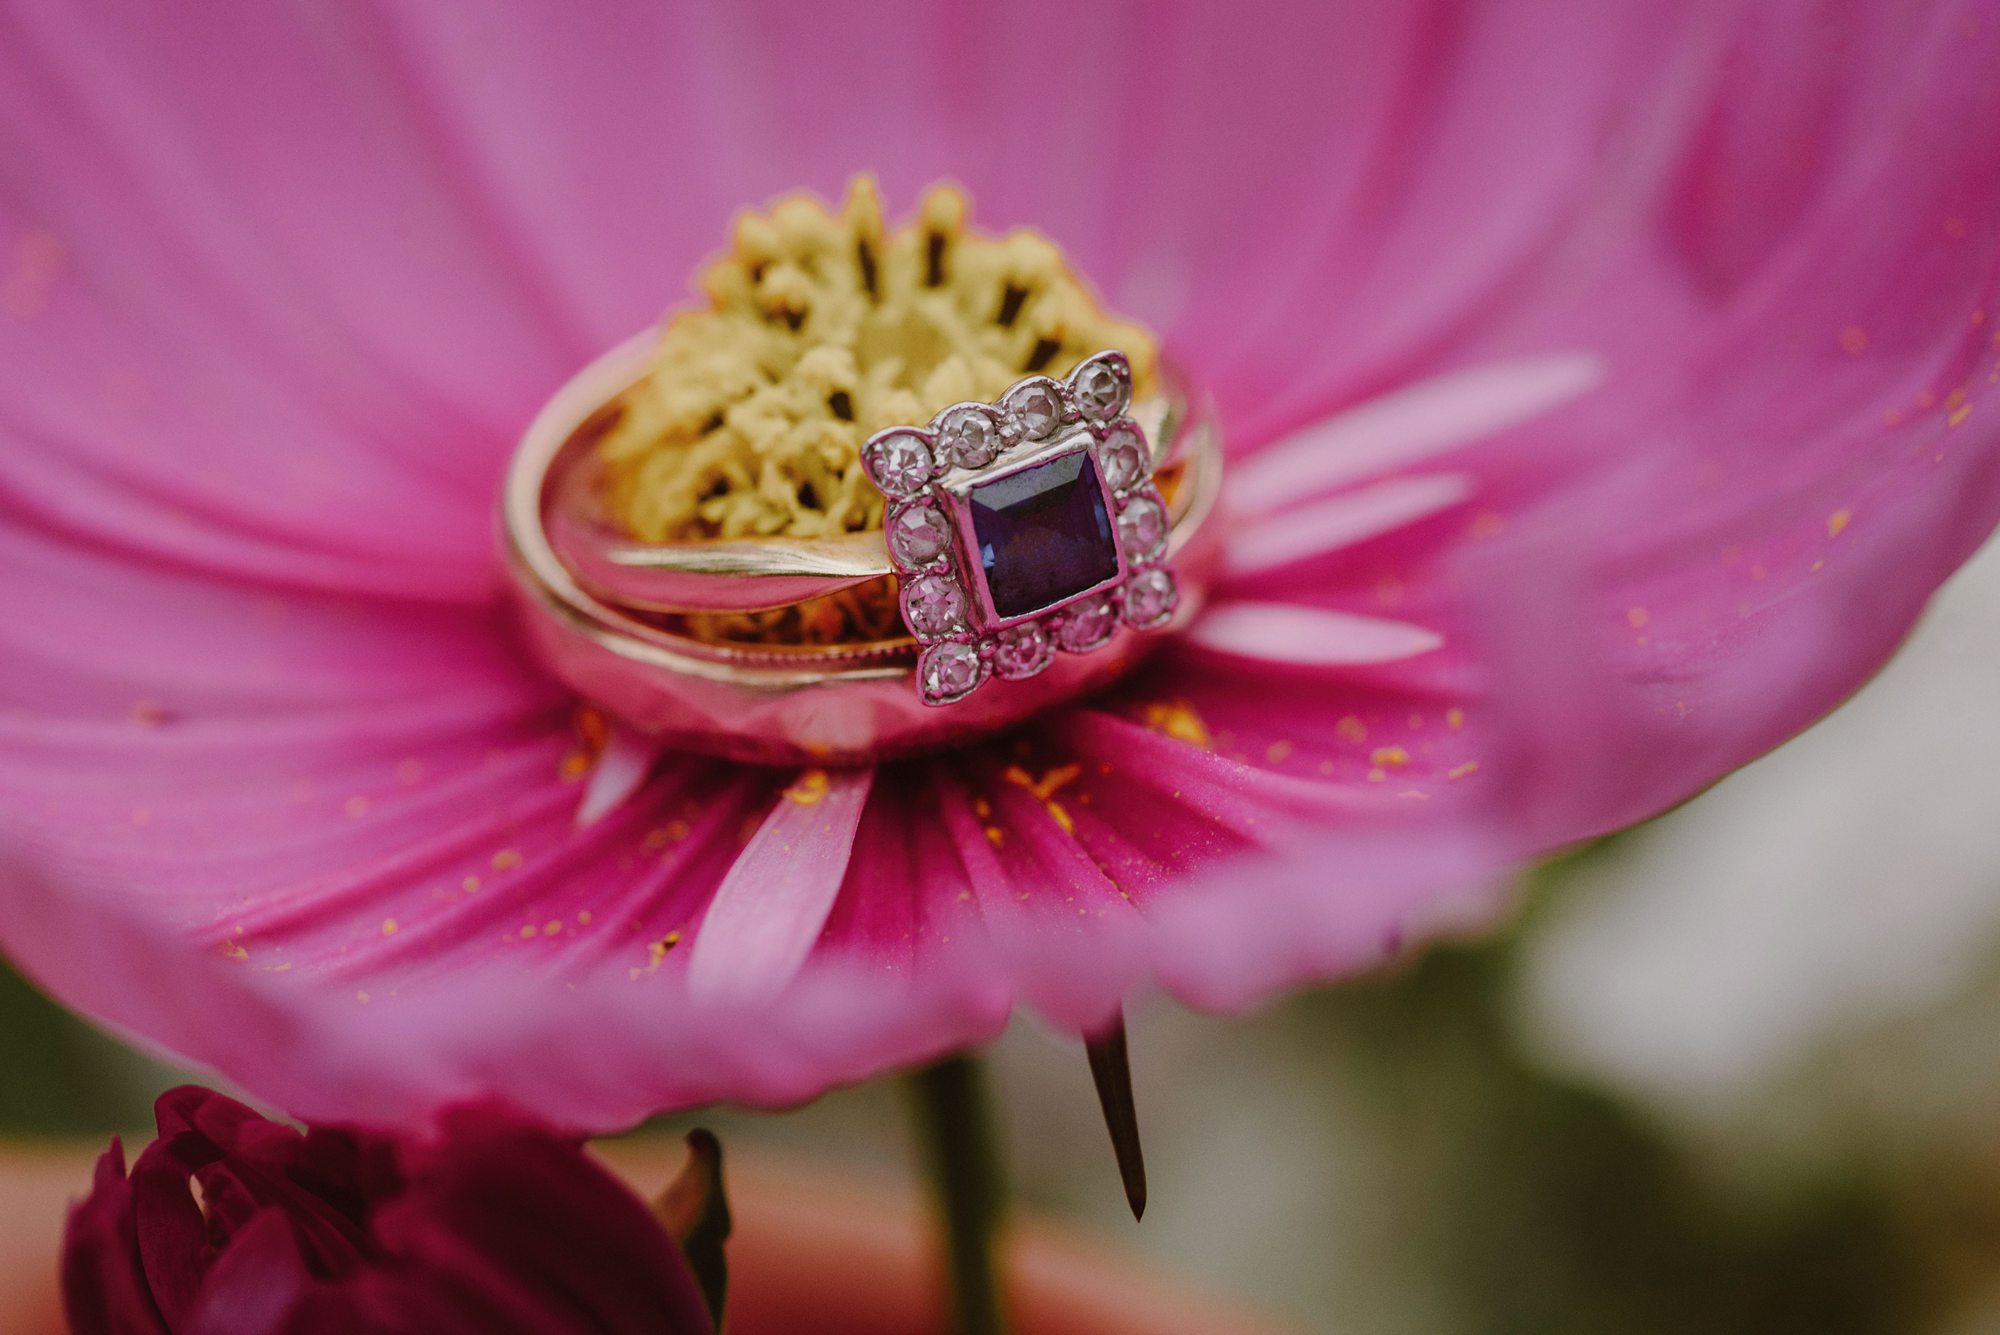 Macro ring shot inside a pink flower